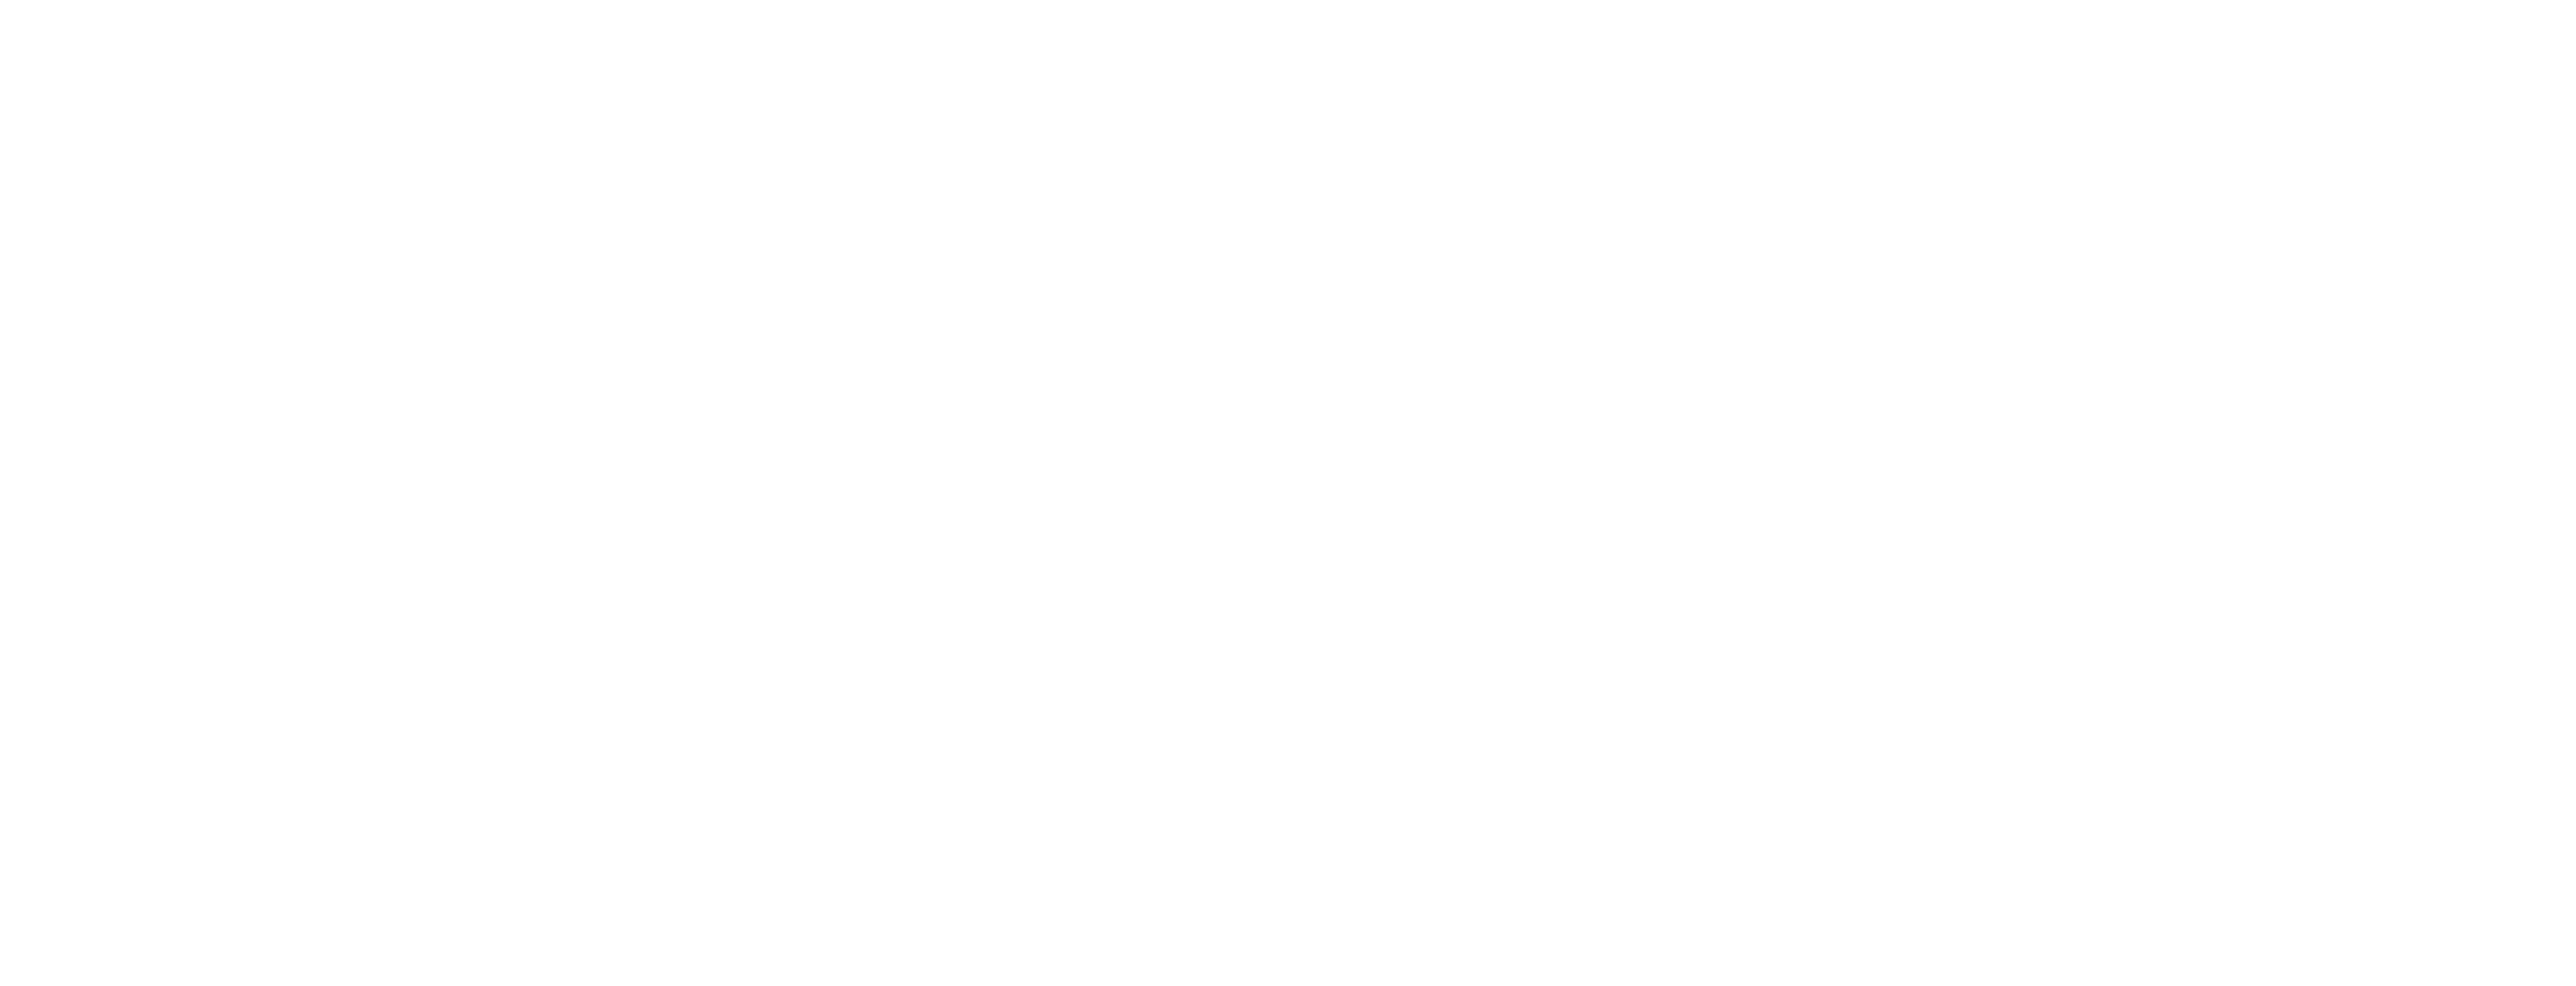 Digital Act